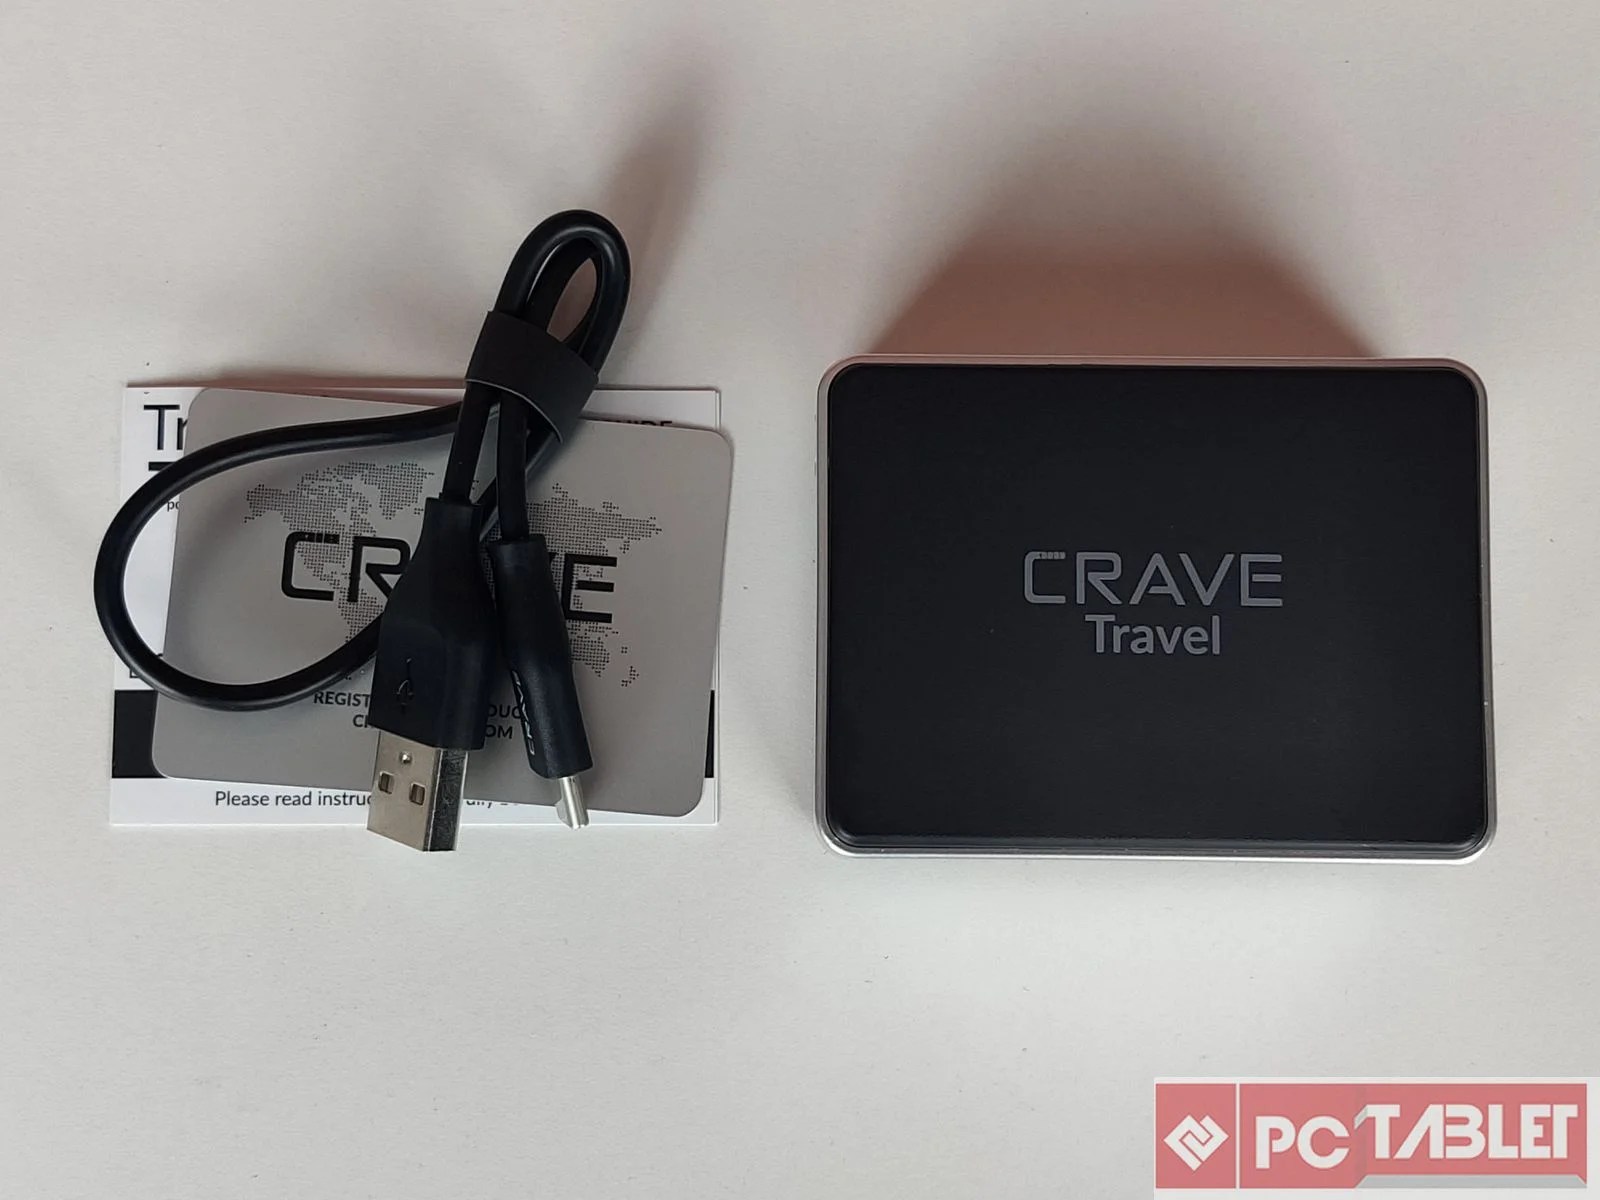 Crave Curve Mini Bluetooth speaker amp Crave Travel Power bank Review 11